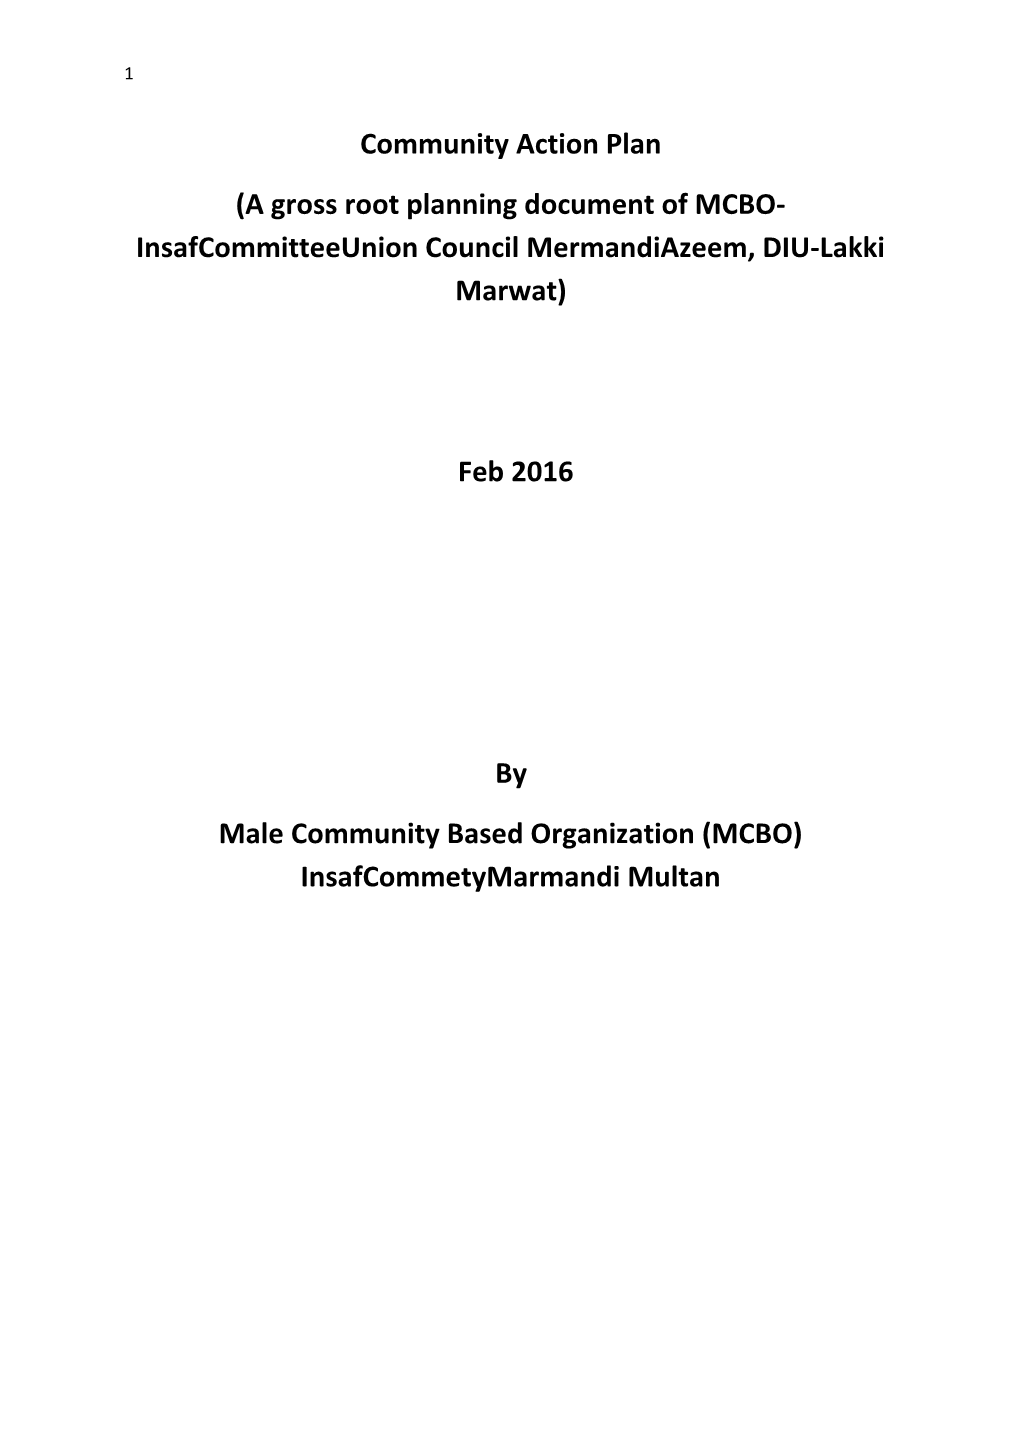 Male Community Based Organization (MCBO) Insafcommetymarmandi Multan